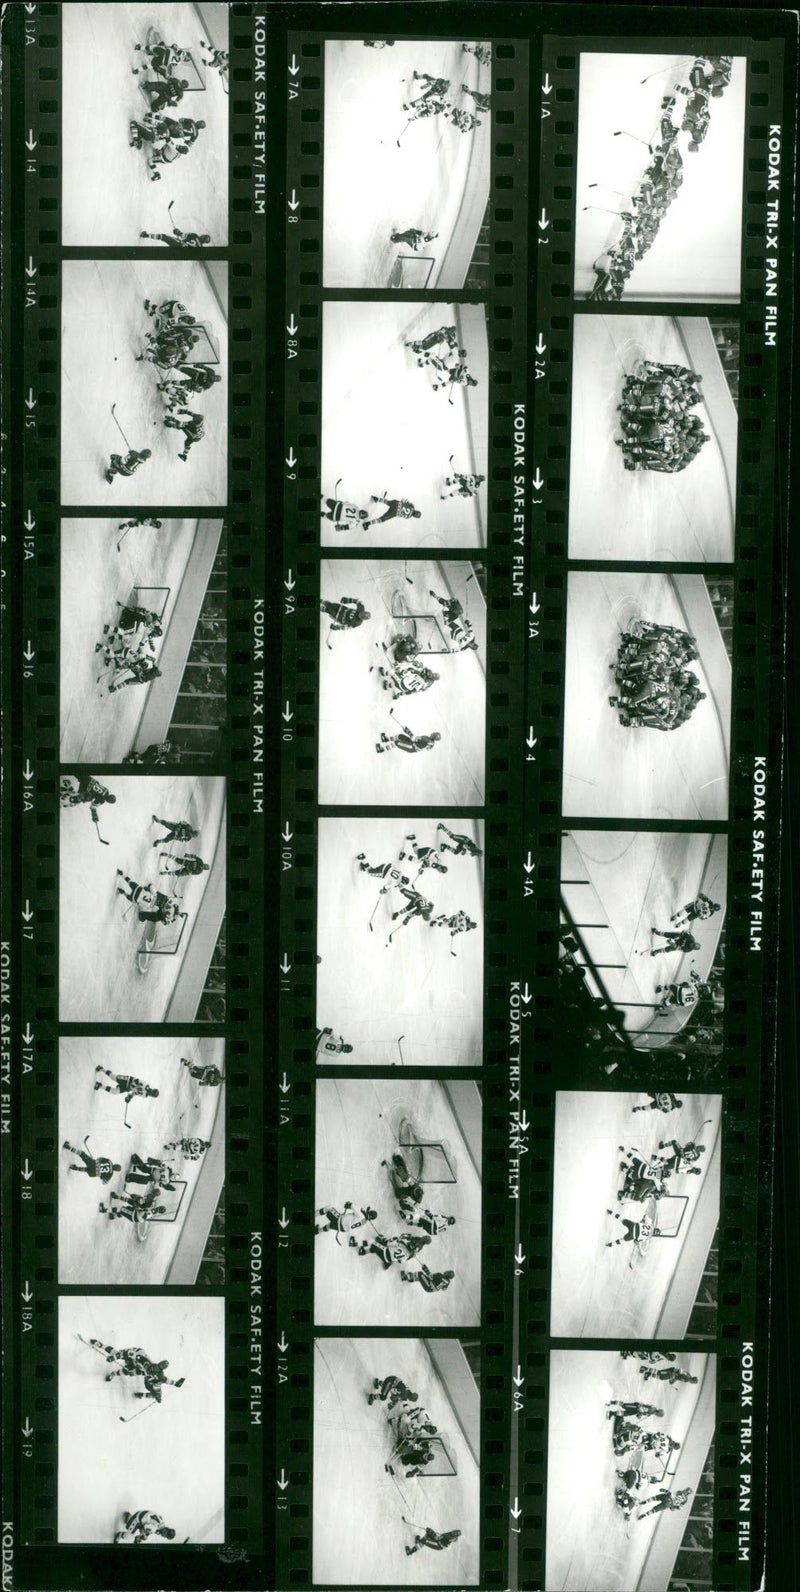 KODAK TRI PAN FILM SAF EISHOCKEY ARTICLE - Vintage Photograph